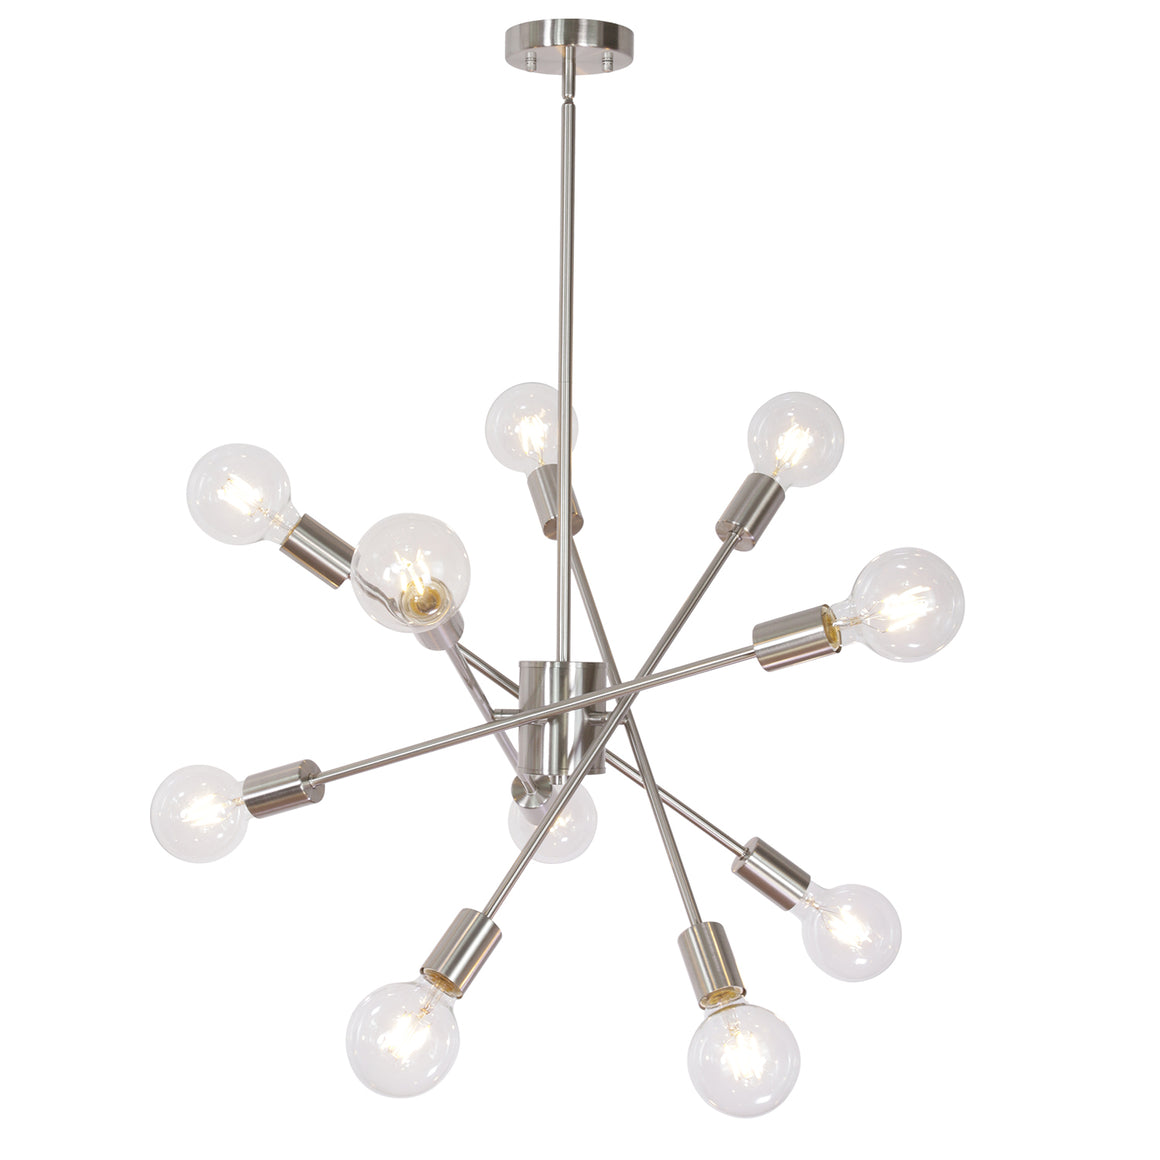 BONLICHT Sputnik Chandeliers Modern 10 Lights Brushed Nickel